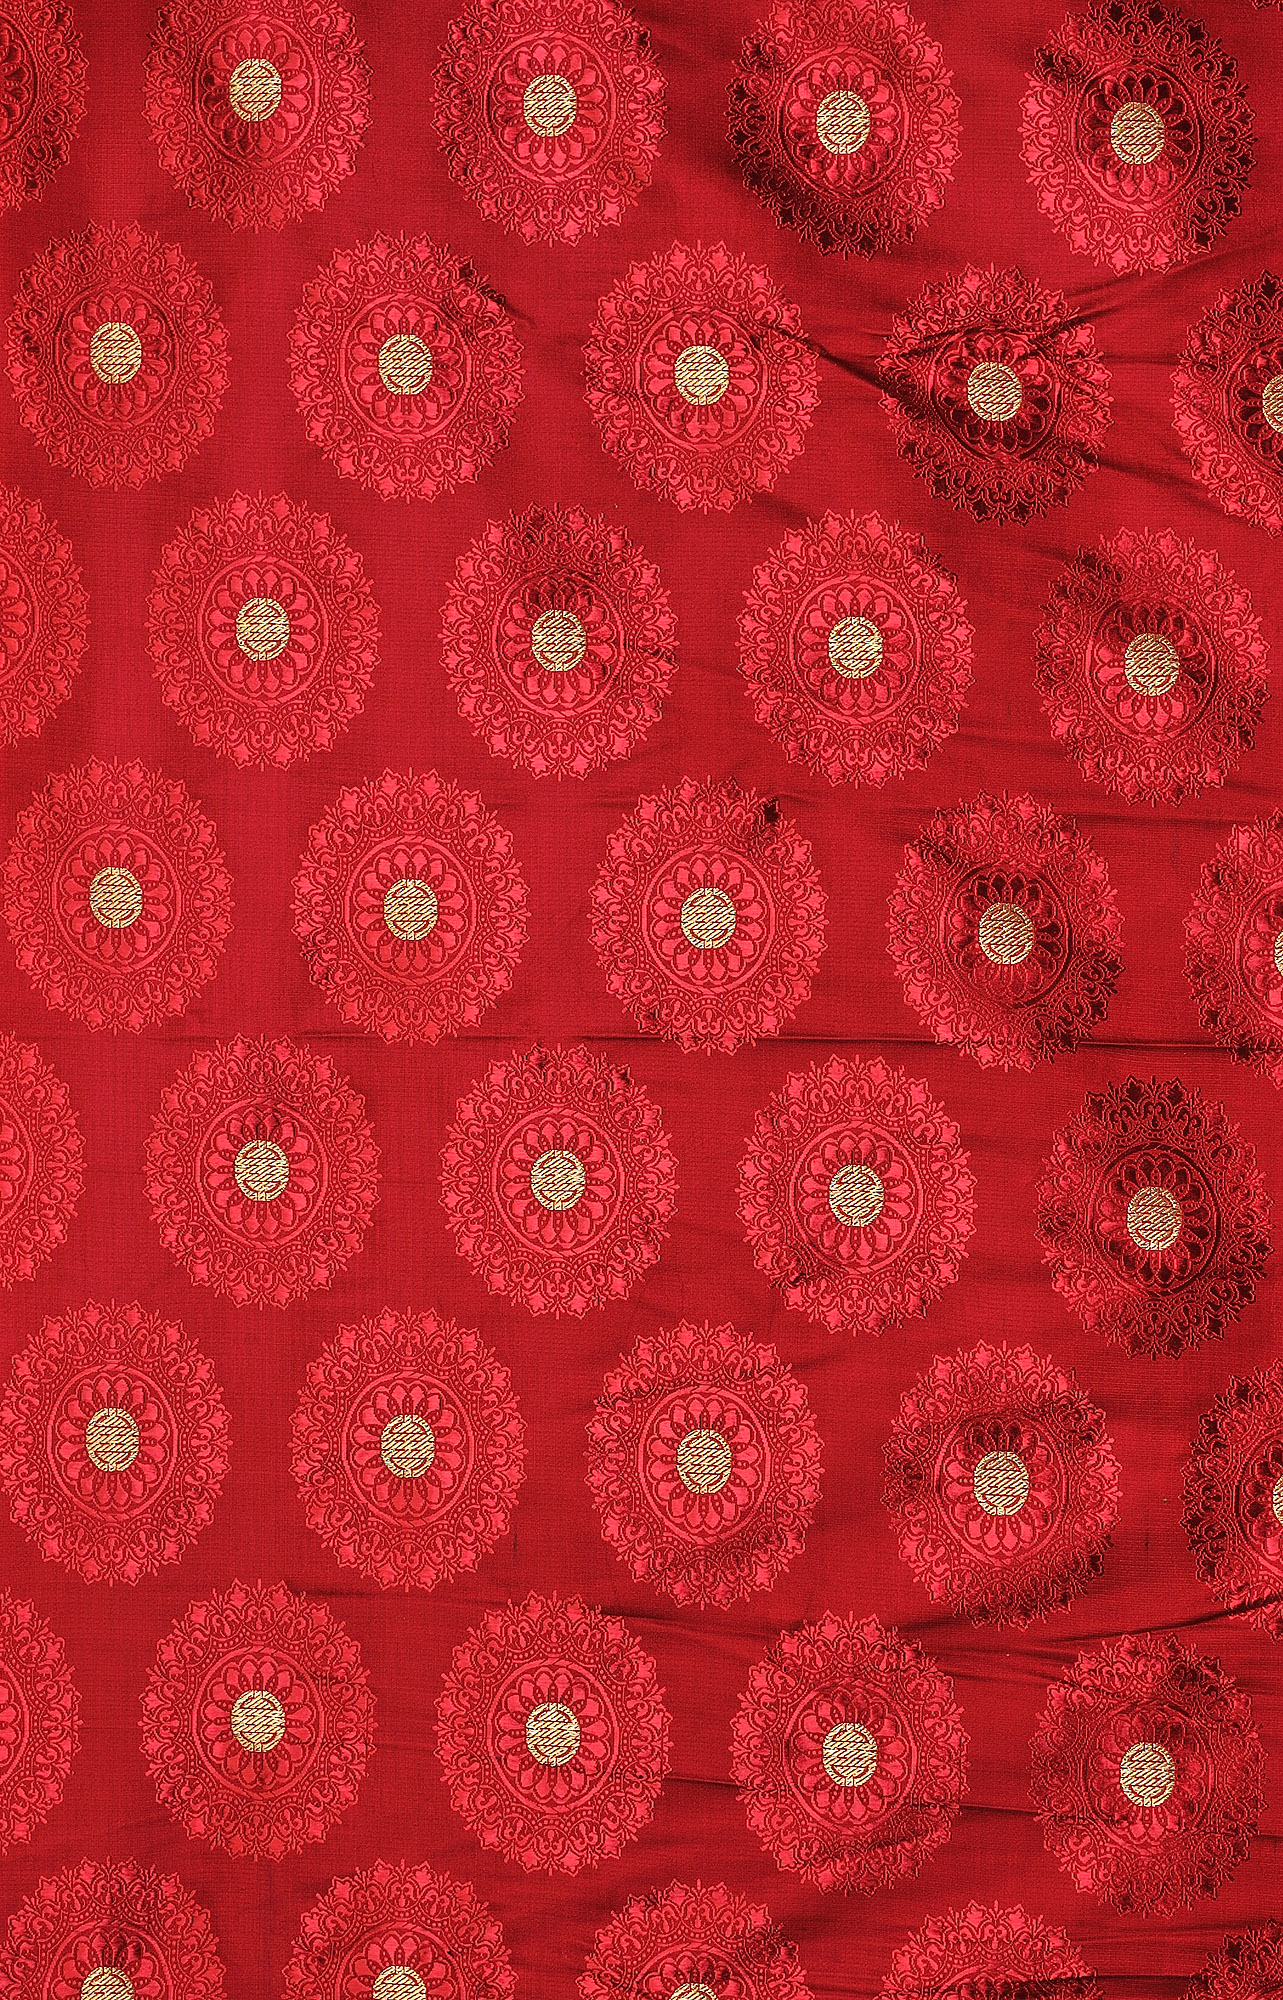 Rosewood-Colored Banarasi Fabric with Woven Chinese Shou Symbols ...